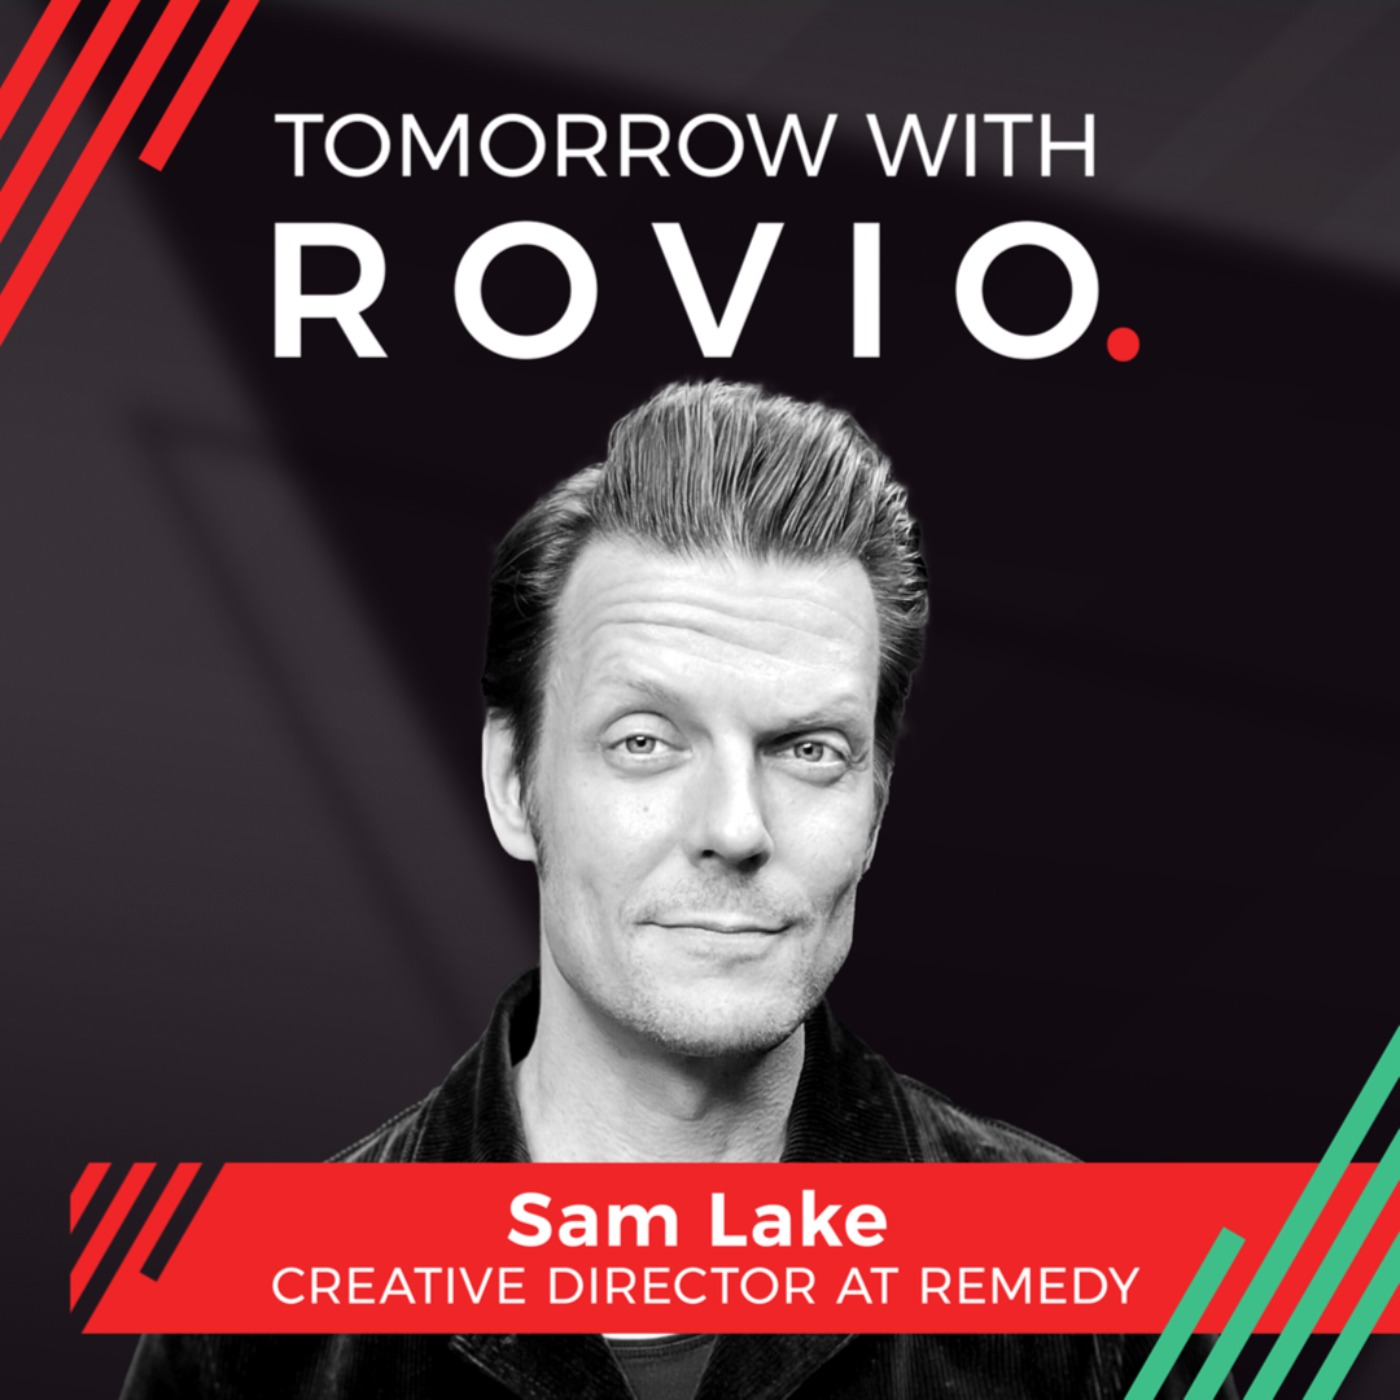 Sam Lake - Creative Director at Remedy